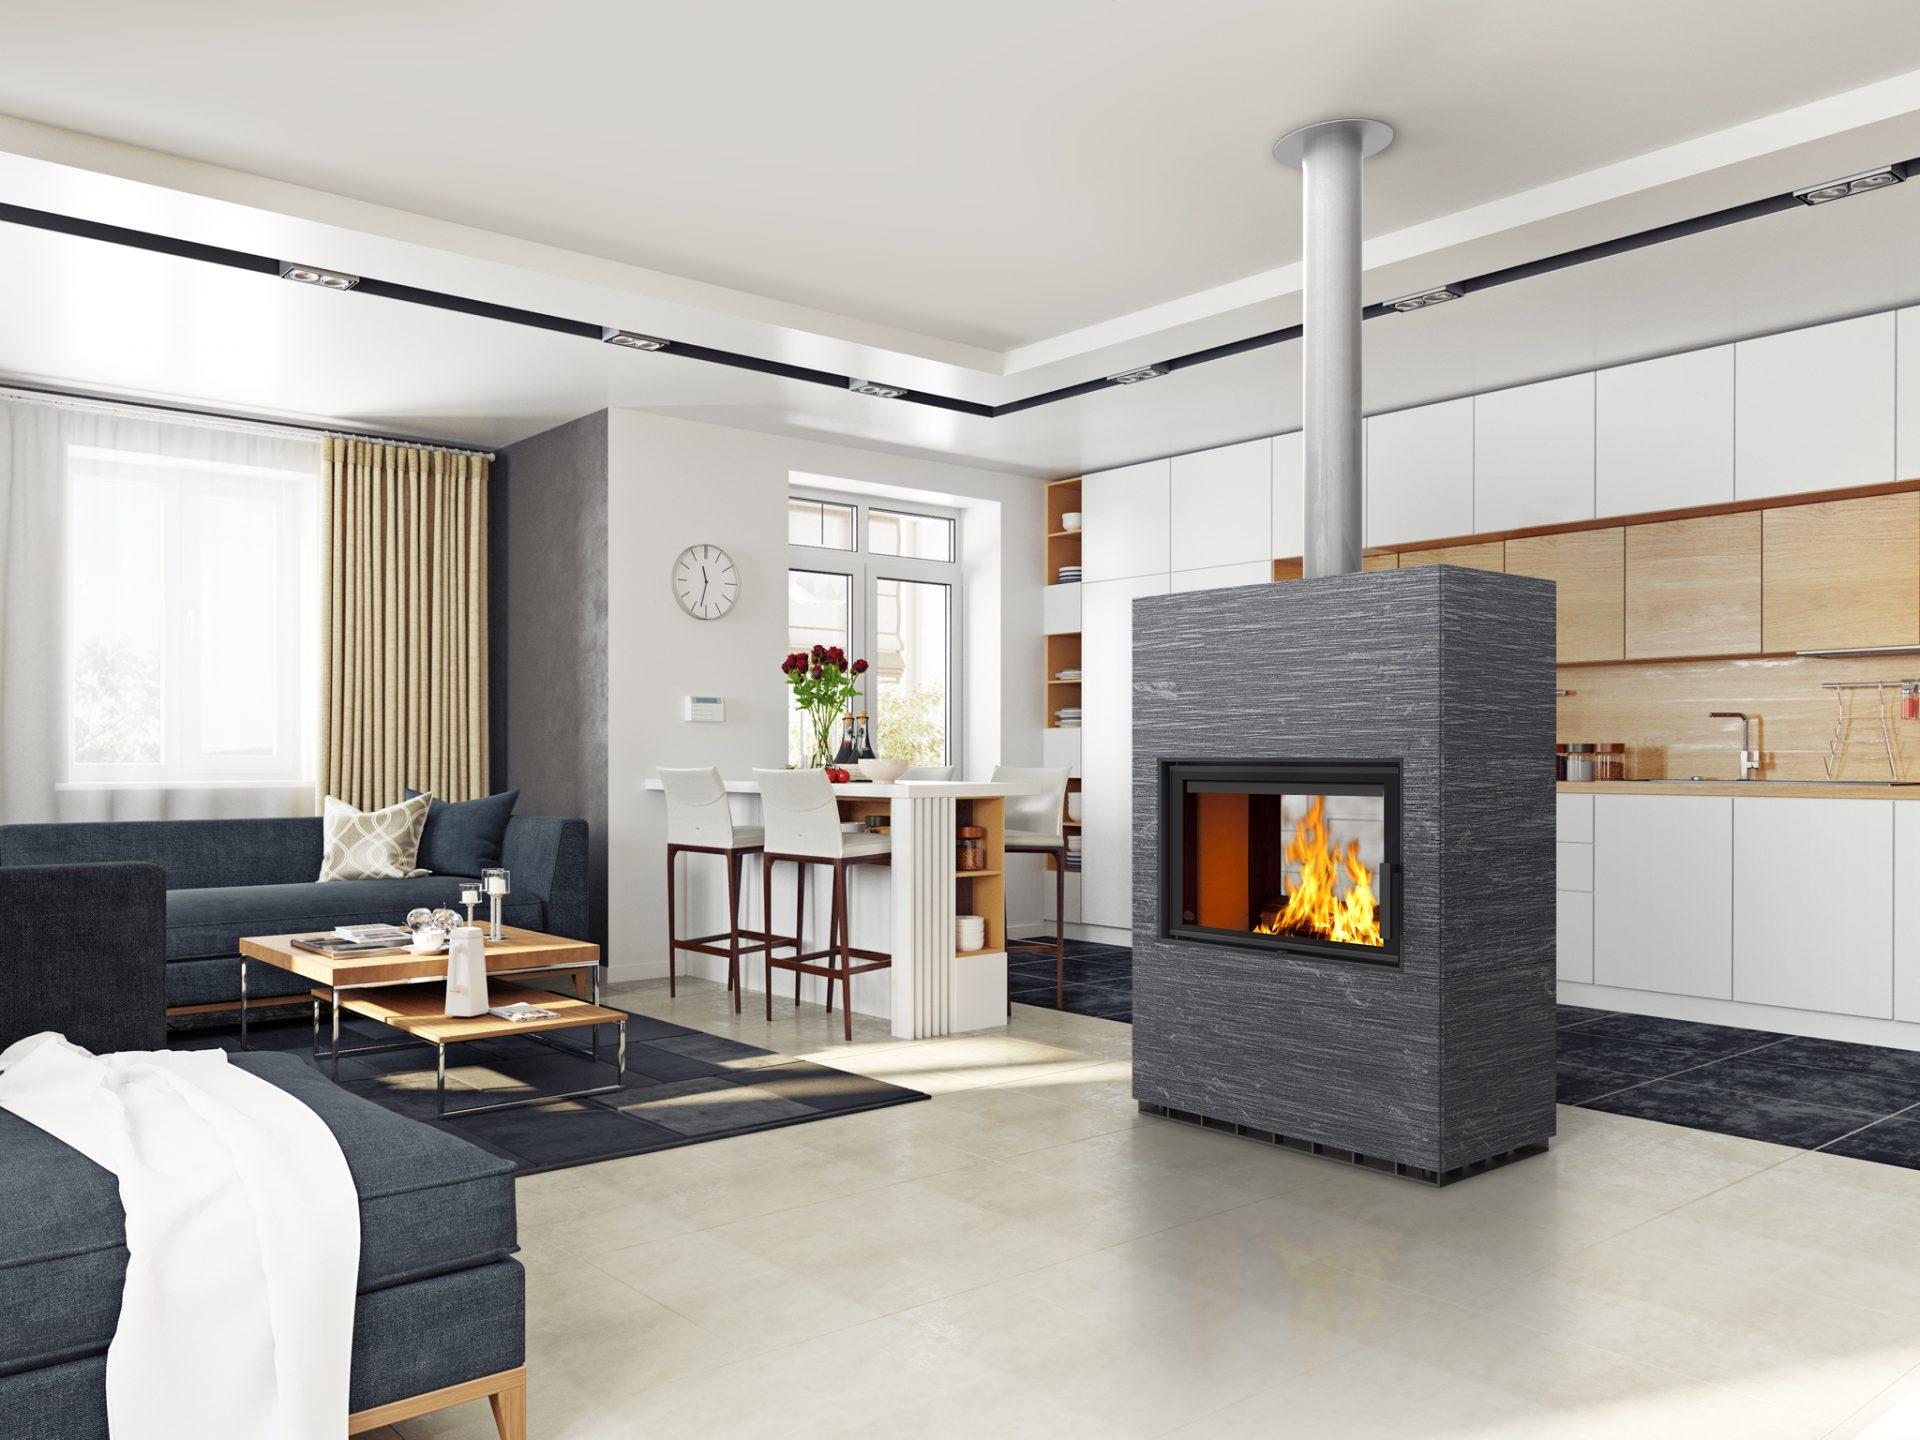 Tulikivi_Pielinen_Lamu_Grafia_takka_fireplace_olohuone_livingroom